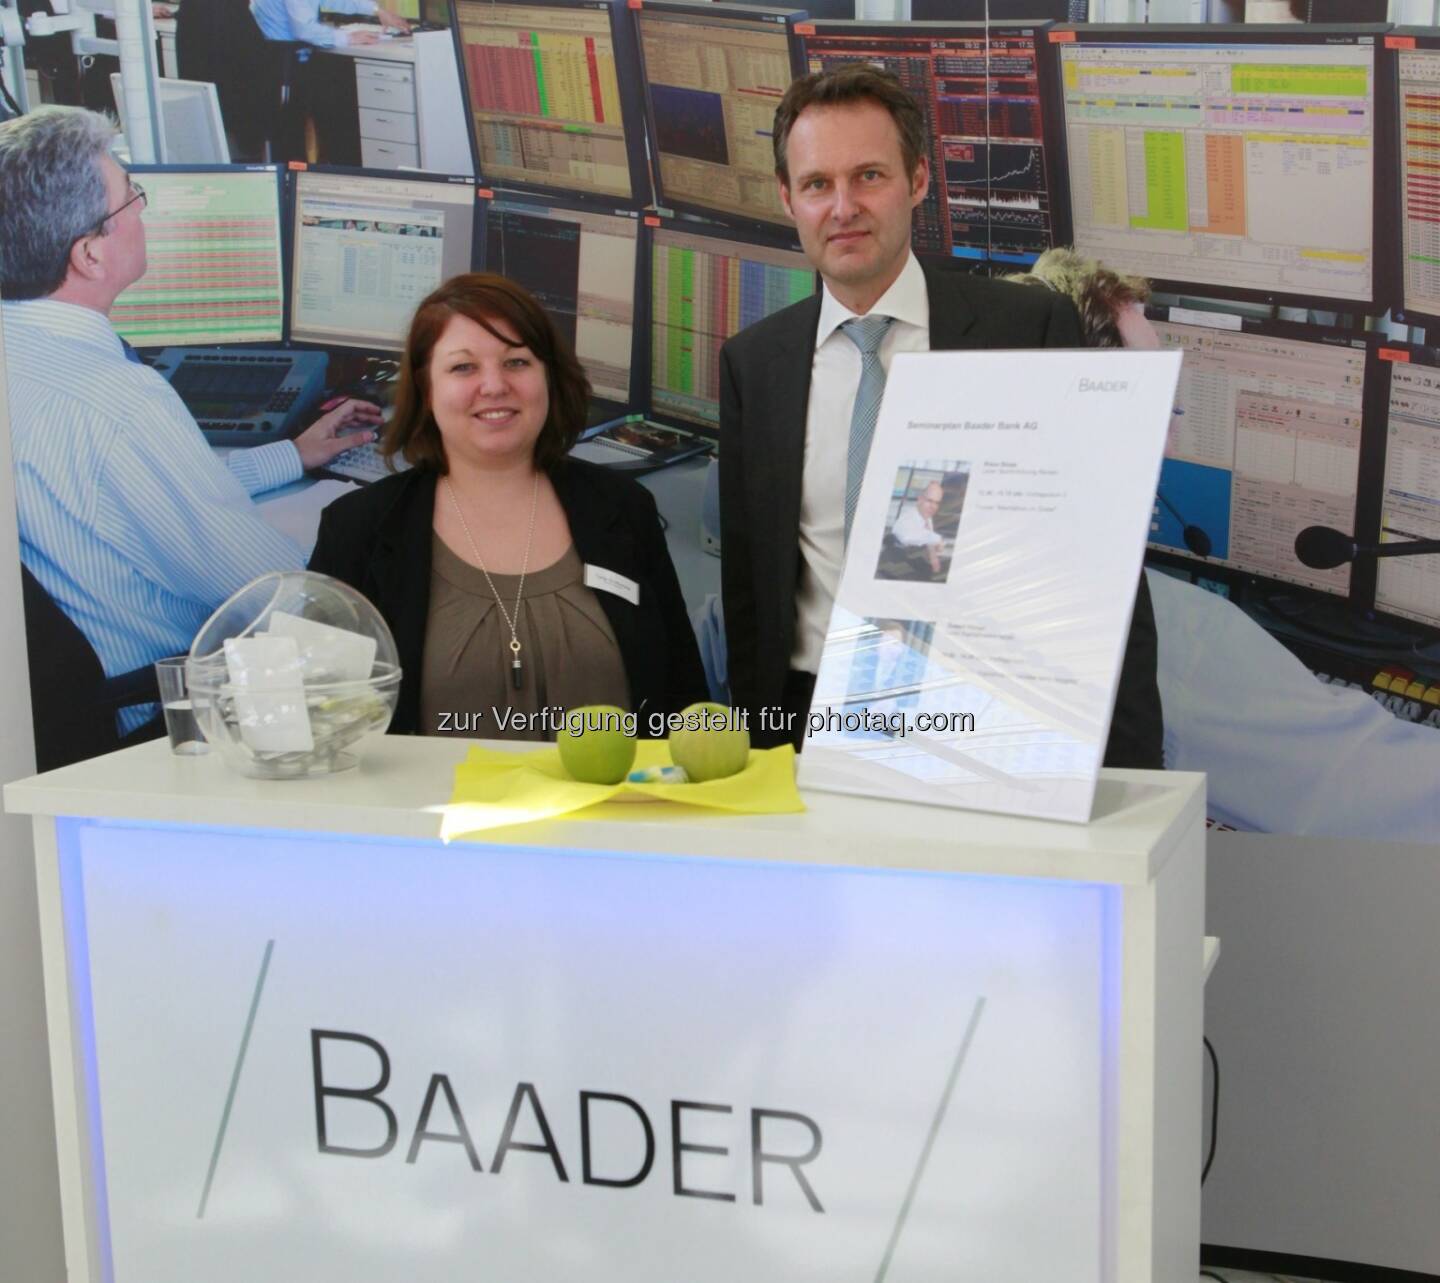 Baader Bank Börsentag München, siehe auch http://blog.palfinger.ag/